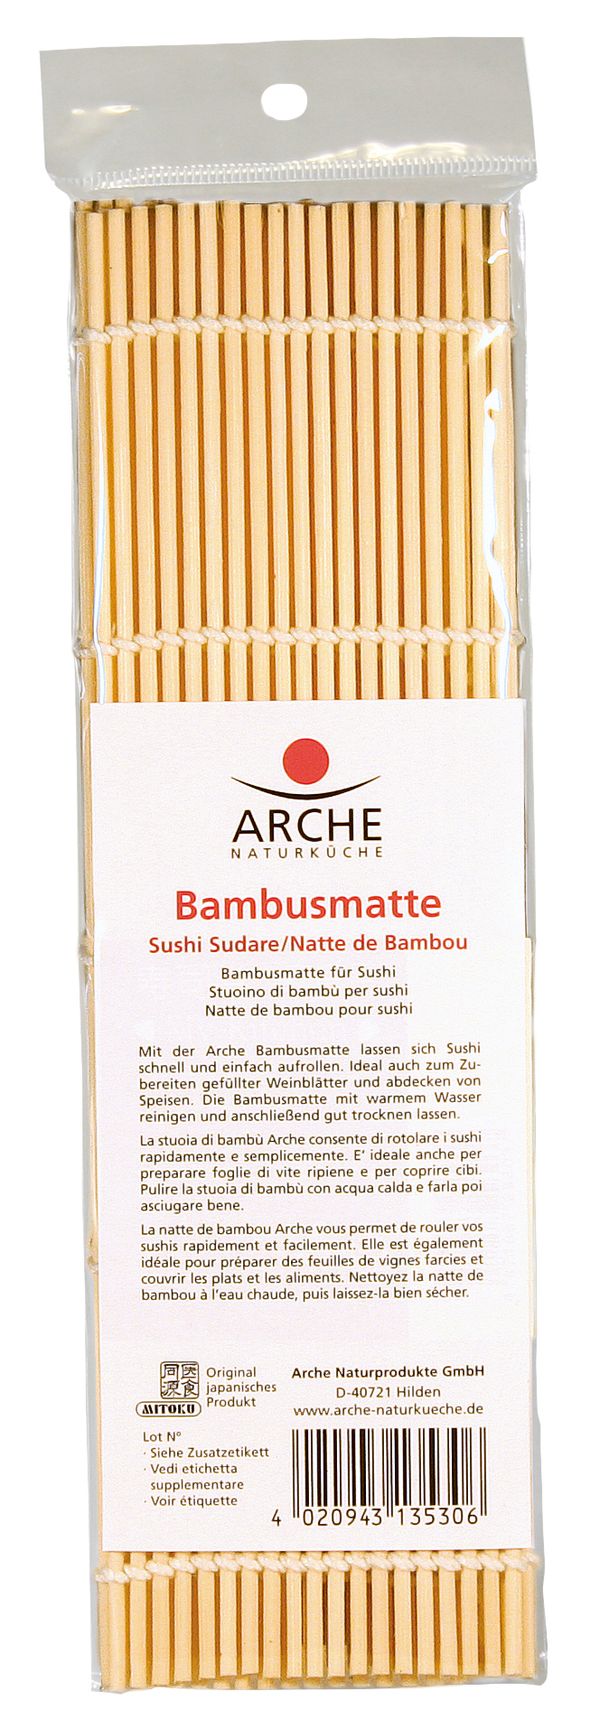 ARCHE auf Bambus-Sushi-Matte